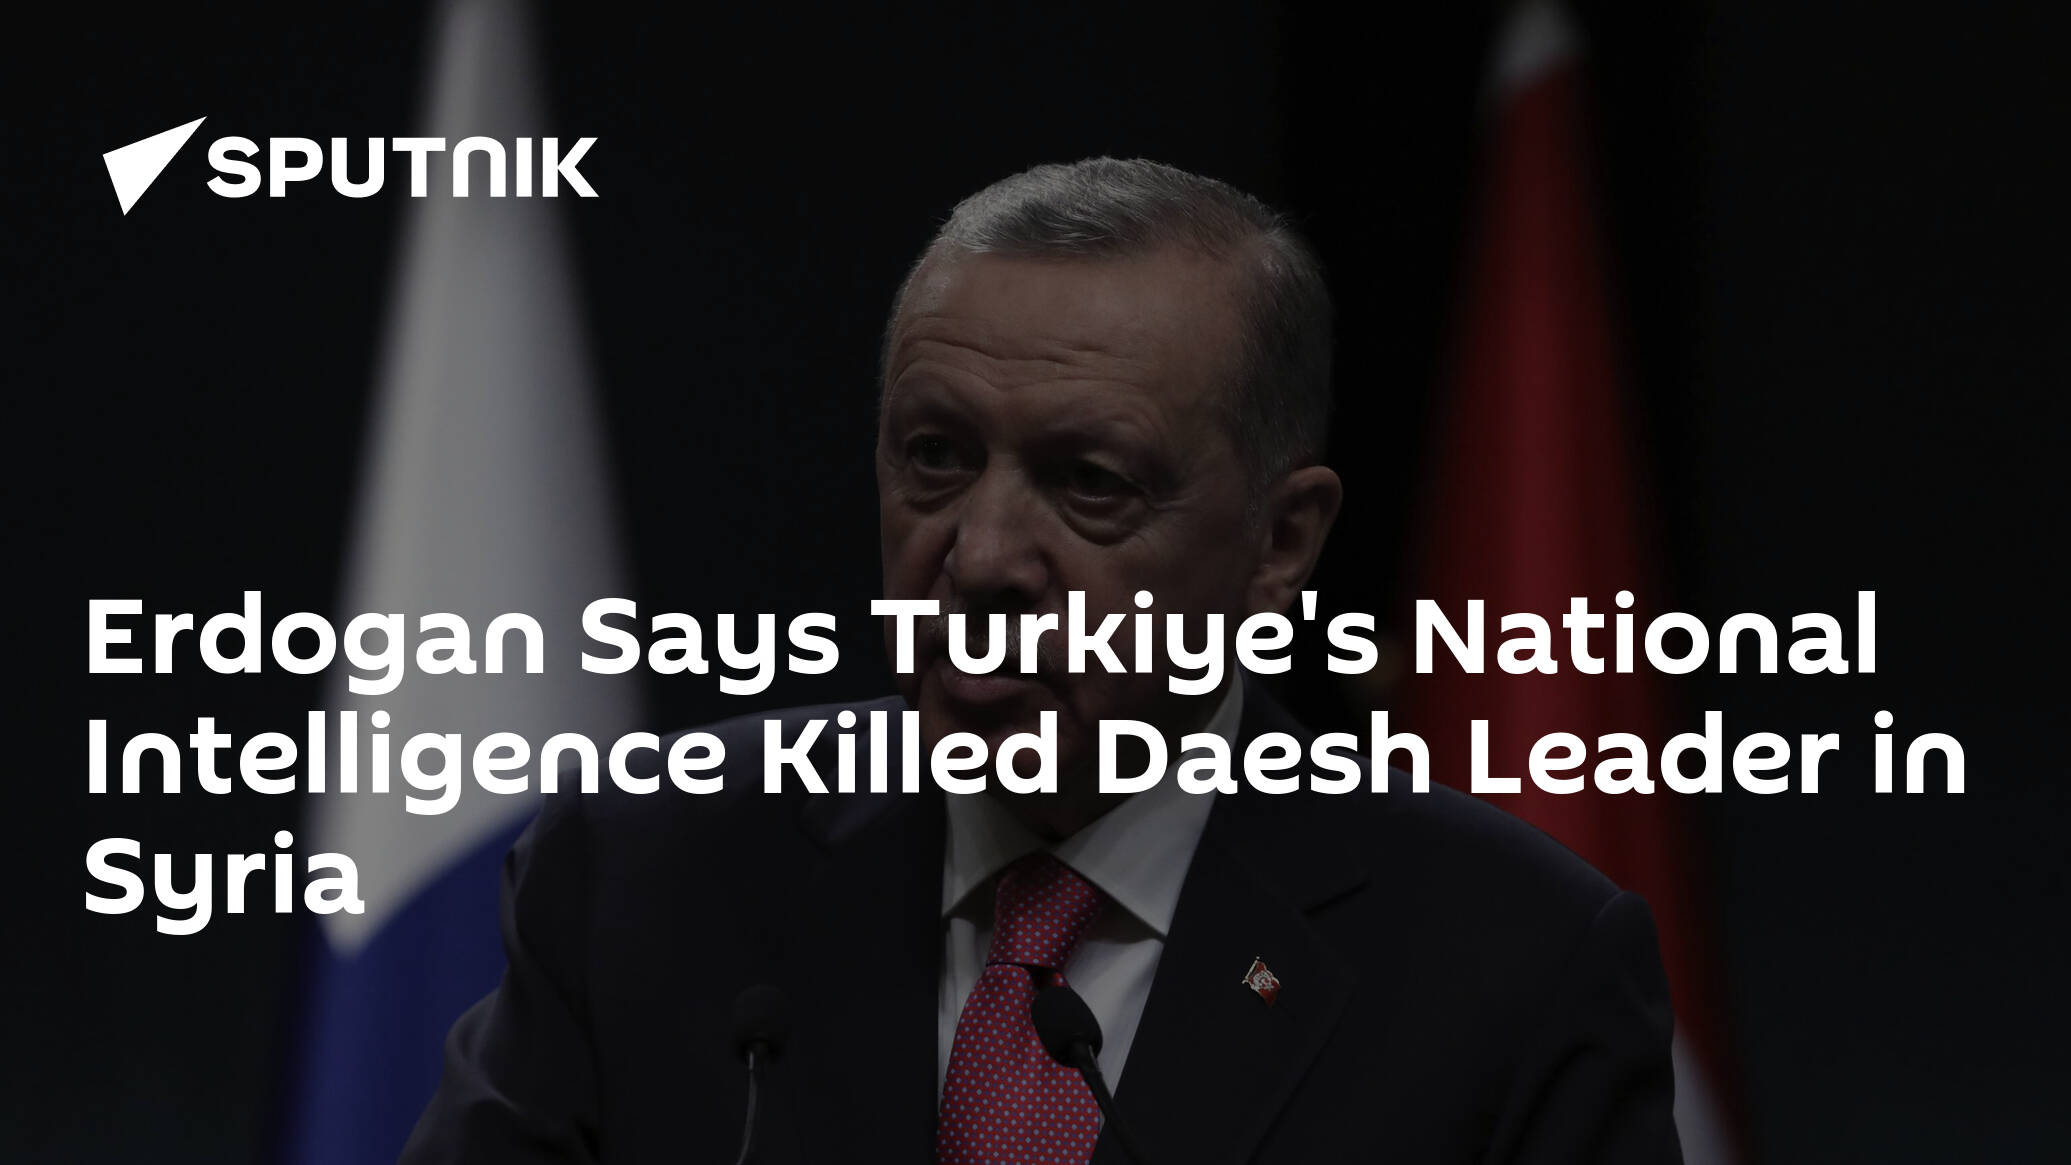 Erdogan Says Turkiye's National Intelligence Killed 'Islamic State Leader' in Syria